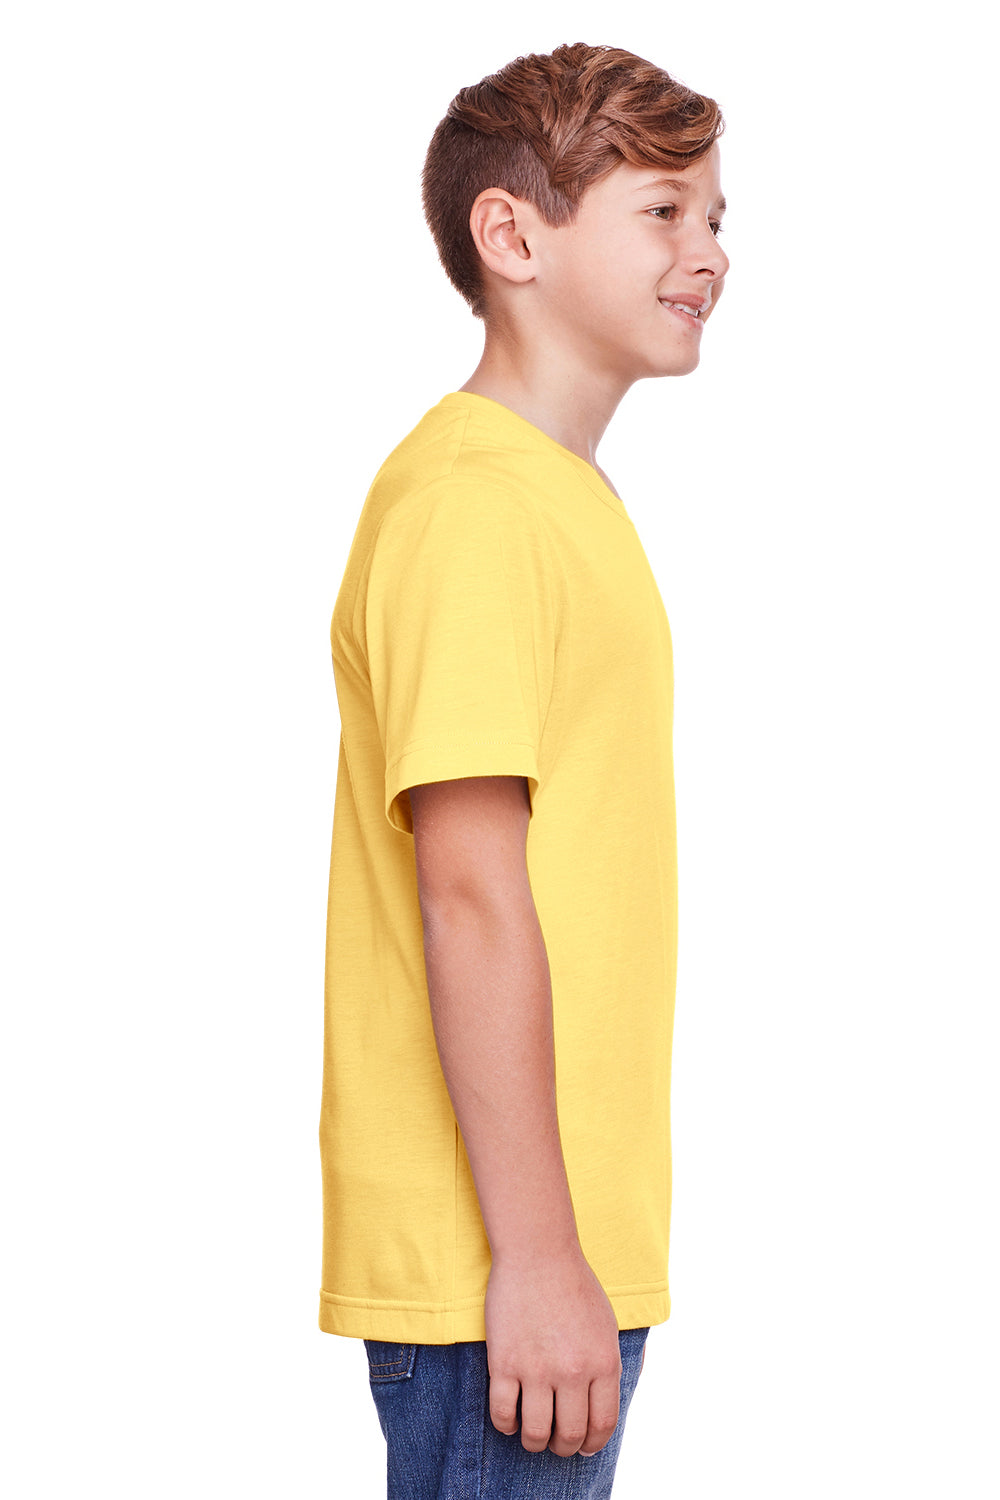 Core 365 CE111Y Youth Fusion ChromaSoft Performance Moisture Wicking Short Sleeve Crewneck T-Shirt Gold Side